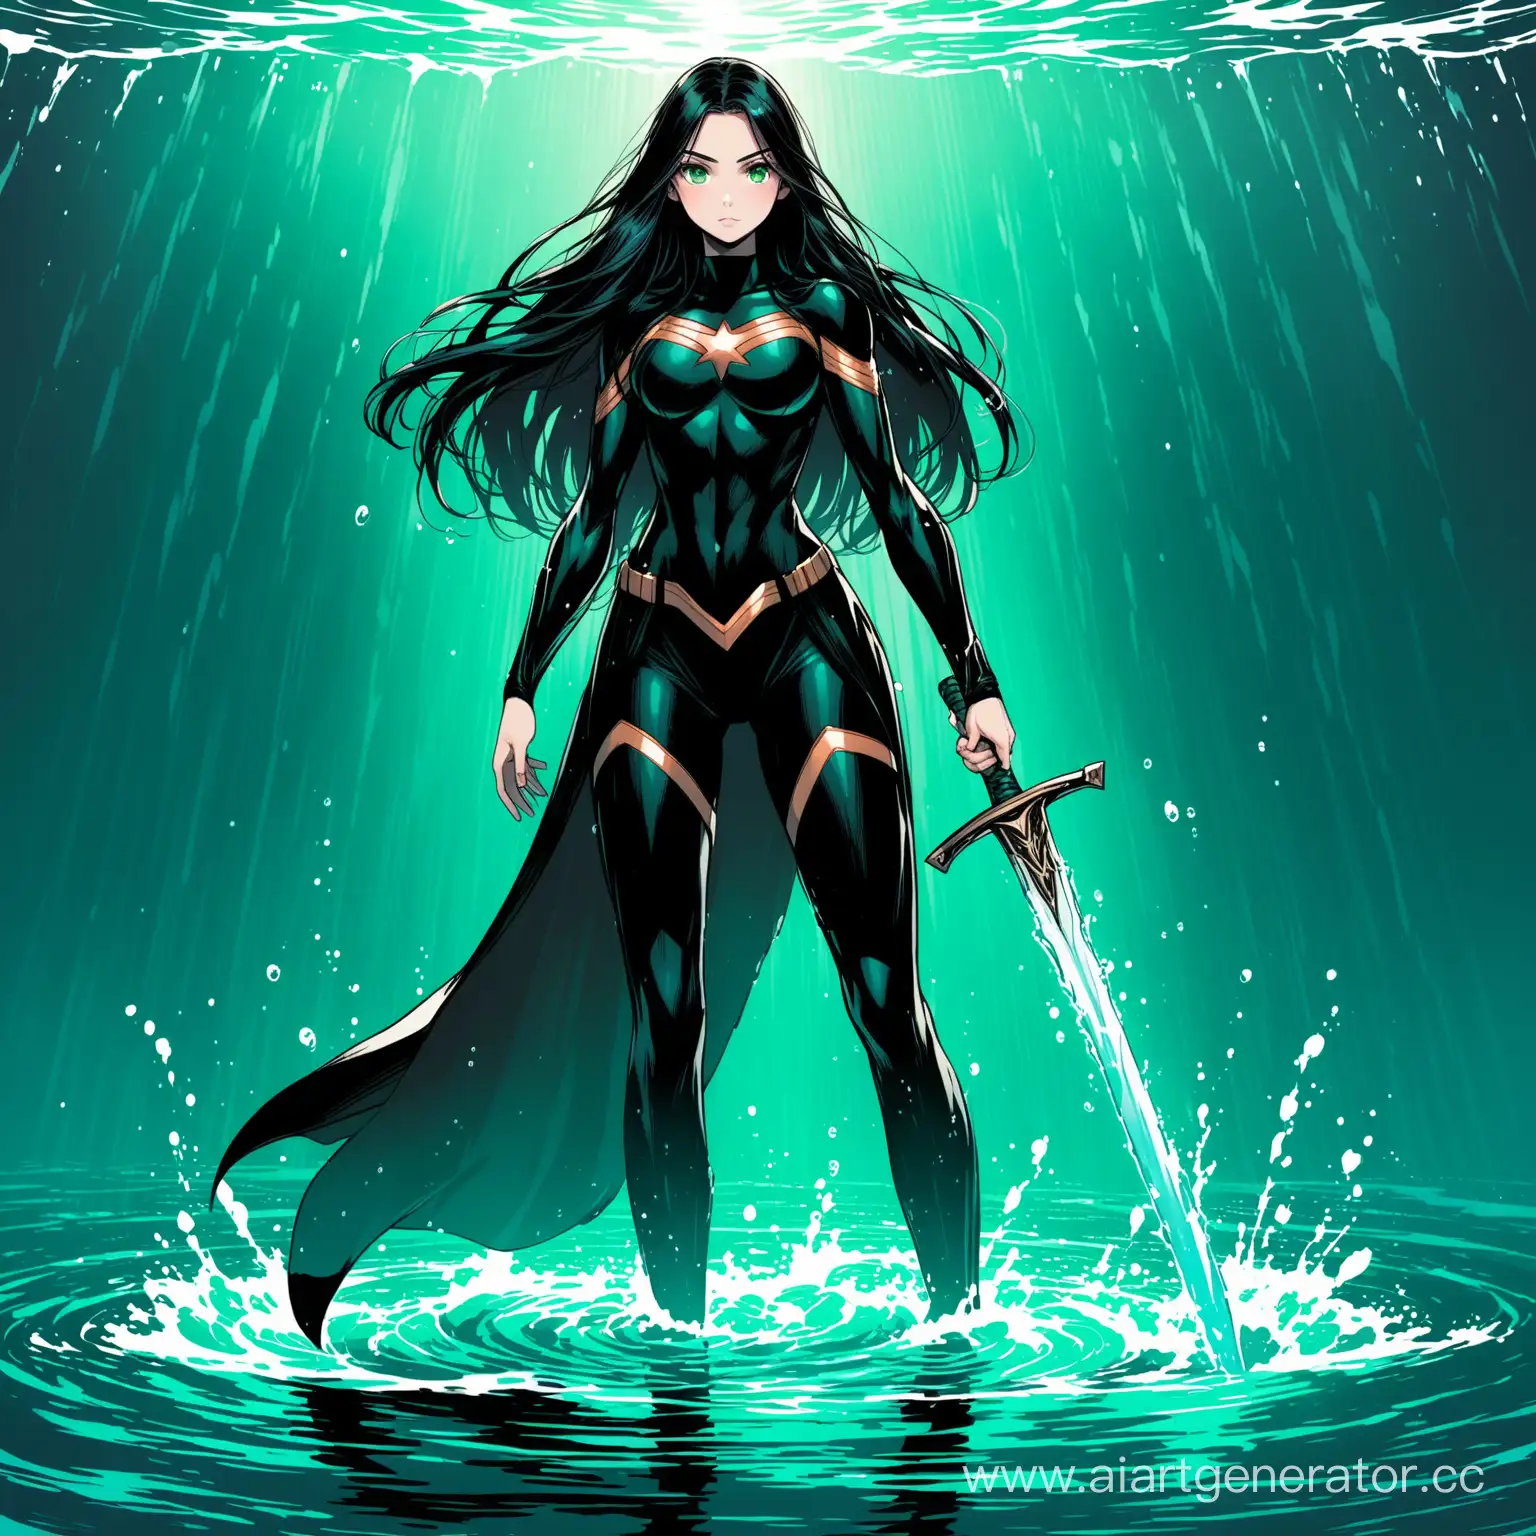 Elegant-Water-Element-Superheroine-with-Sword-in-Watery-Domain